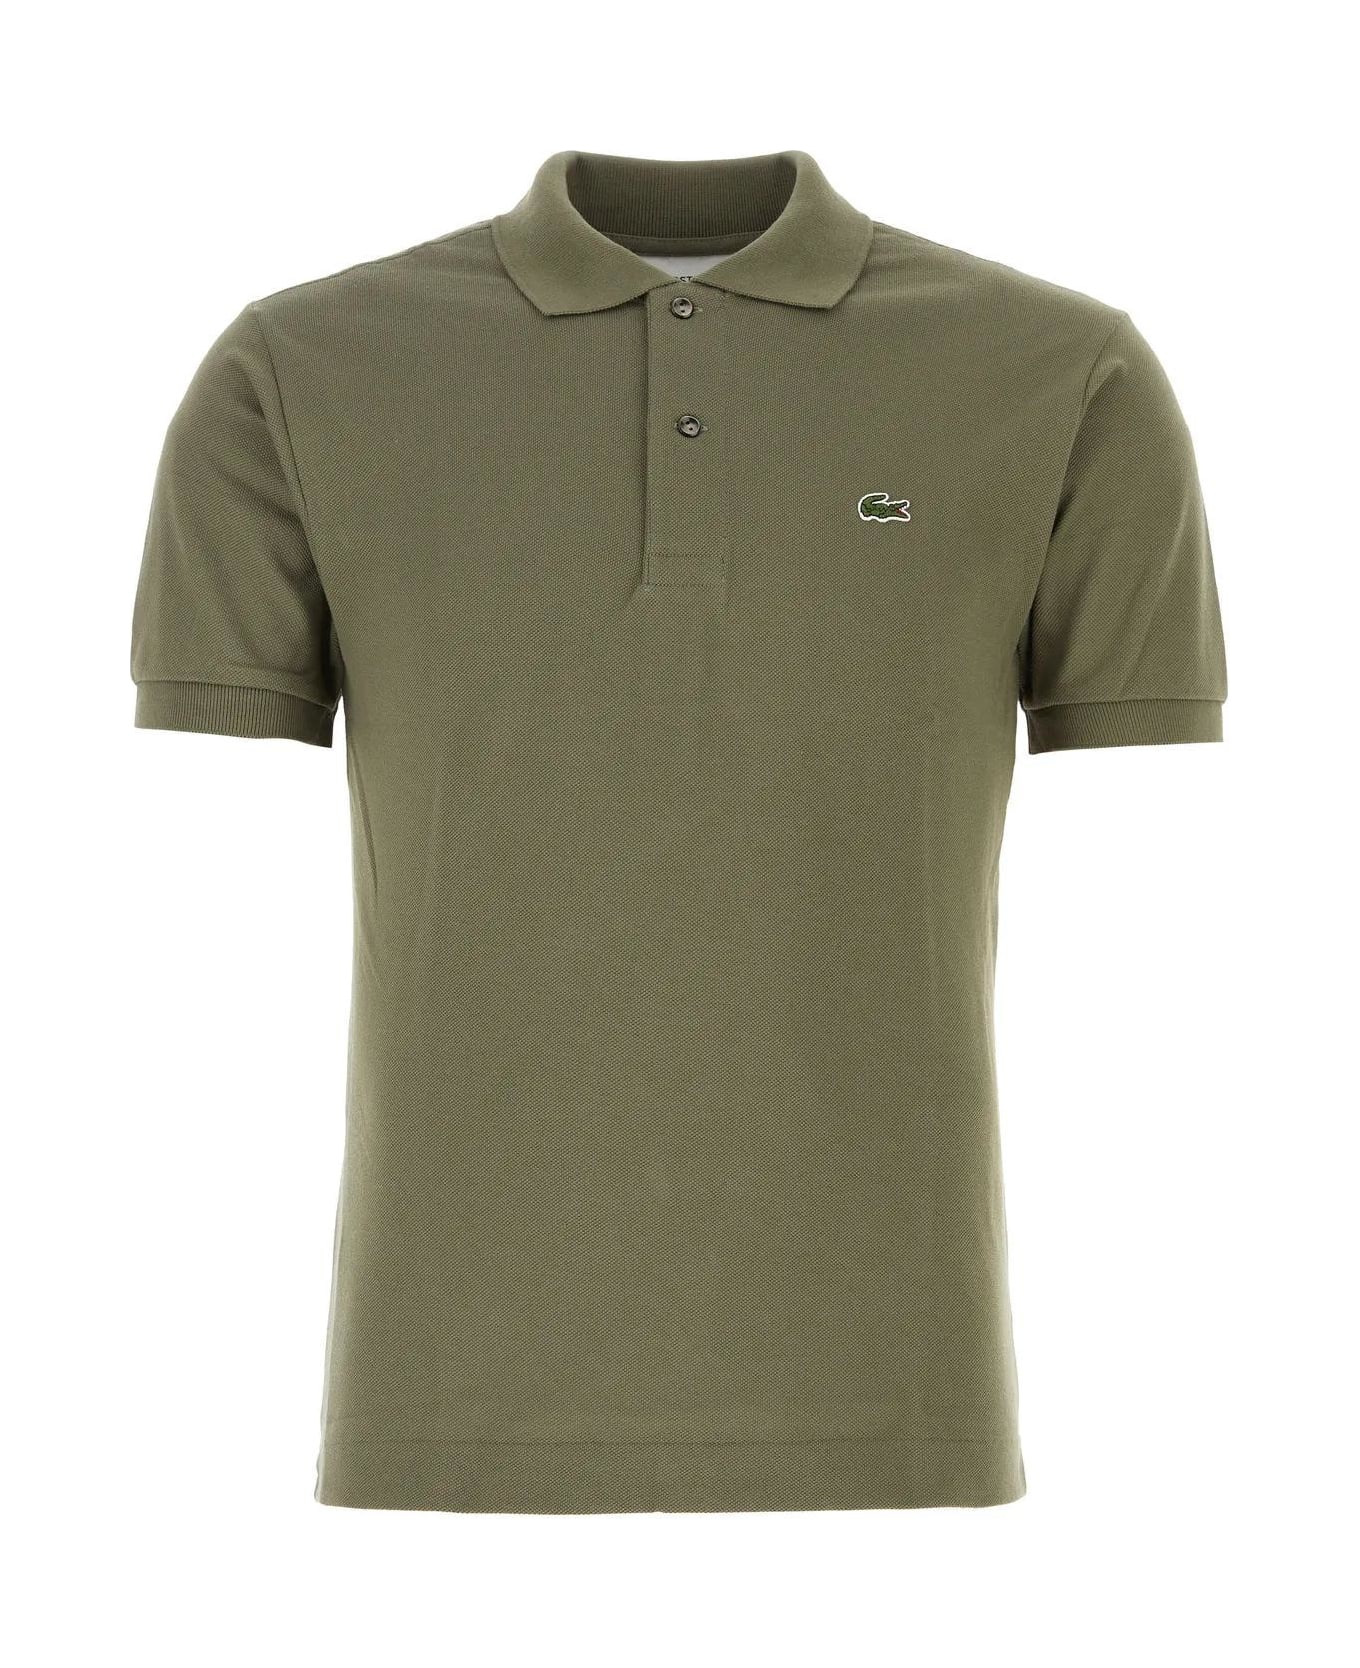 Lacoste Army Green Piquet Polo Shirt - Khaki